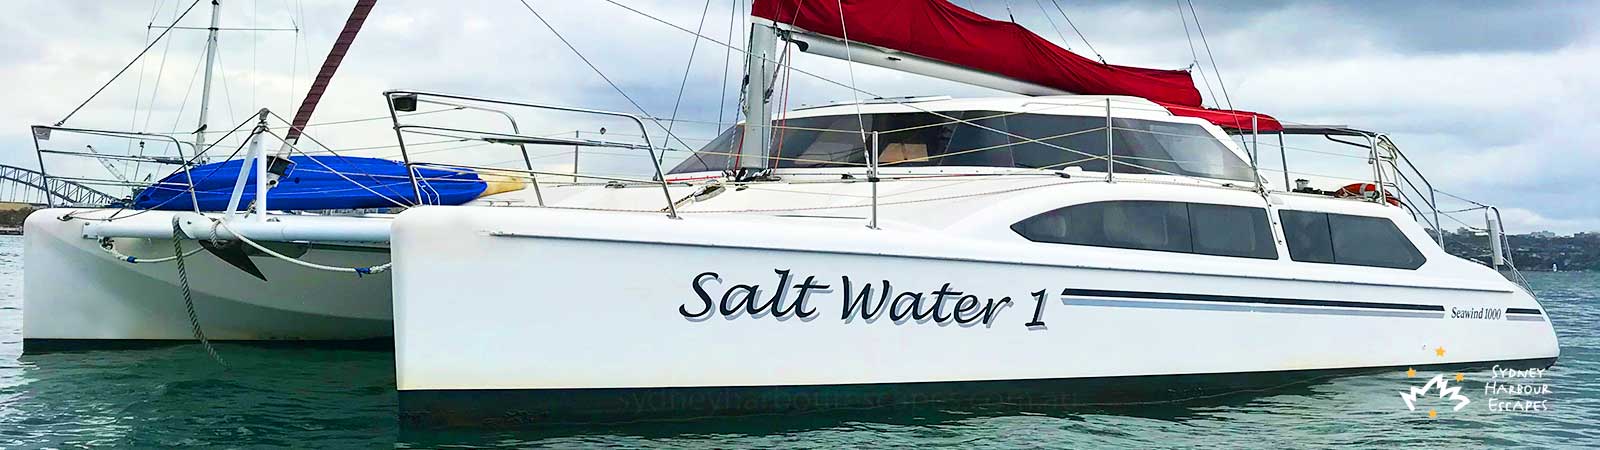 Saltwater I anchored on Sydney Harbour